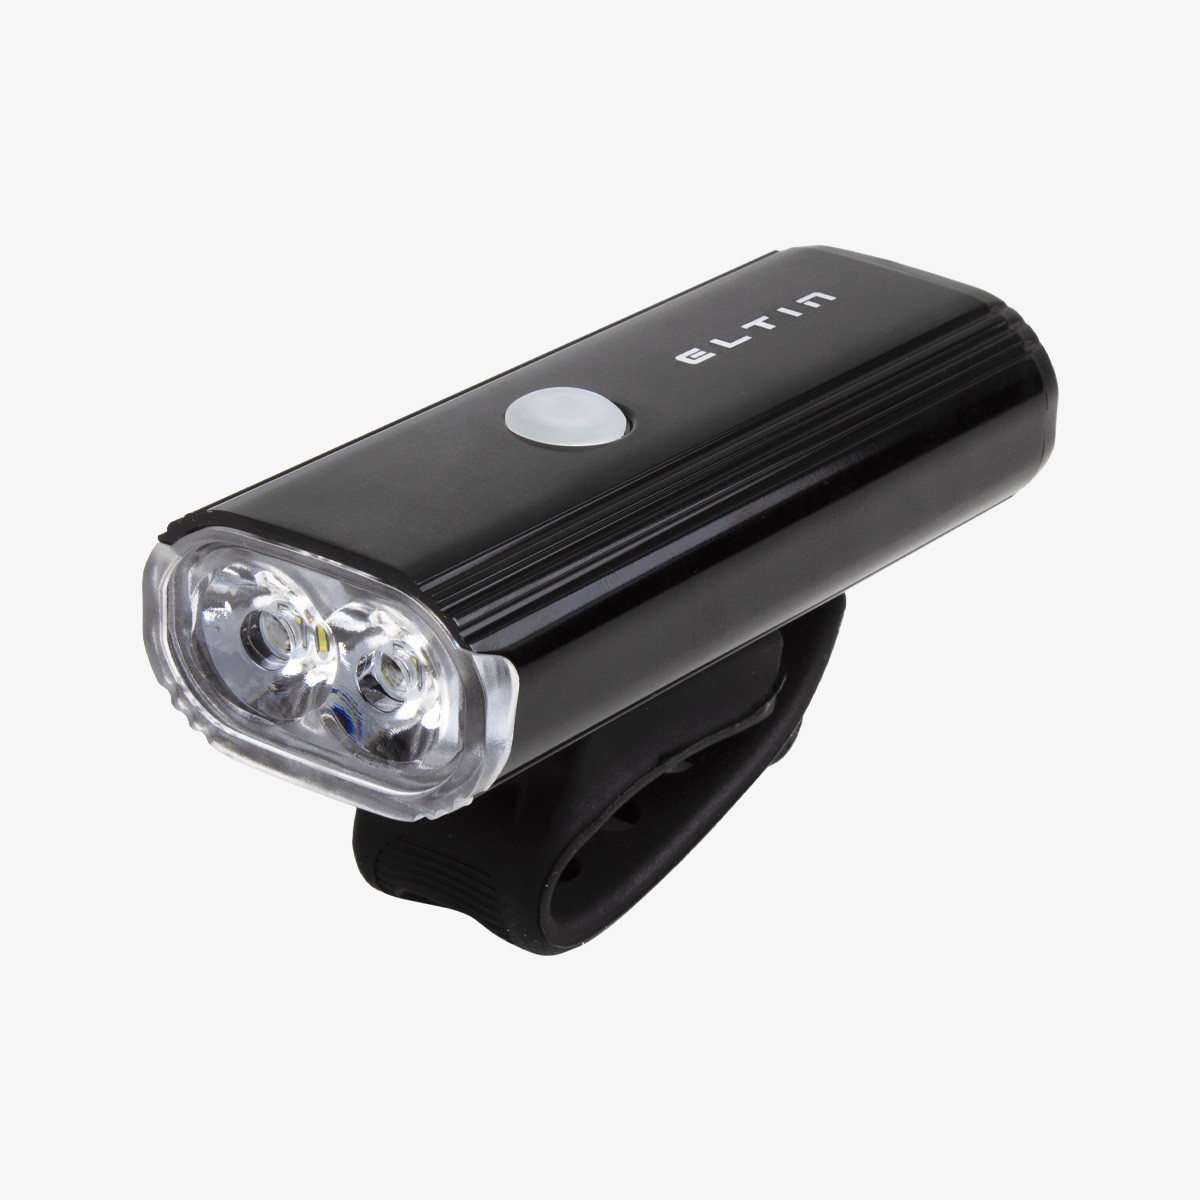 Juego de 2 Lampara Linterna de Taller LED recargable USB y Bateria externa  POWERBANK para cargar movil